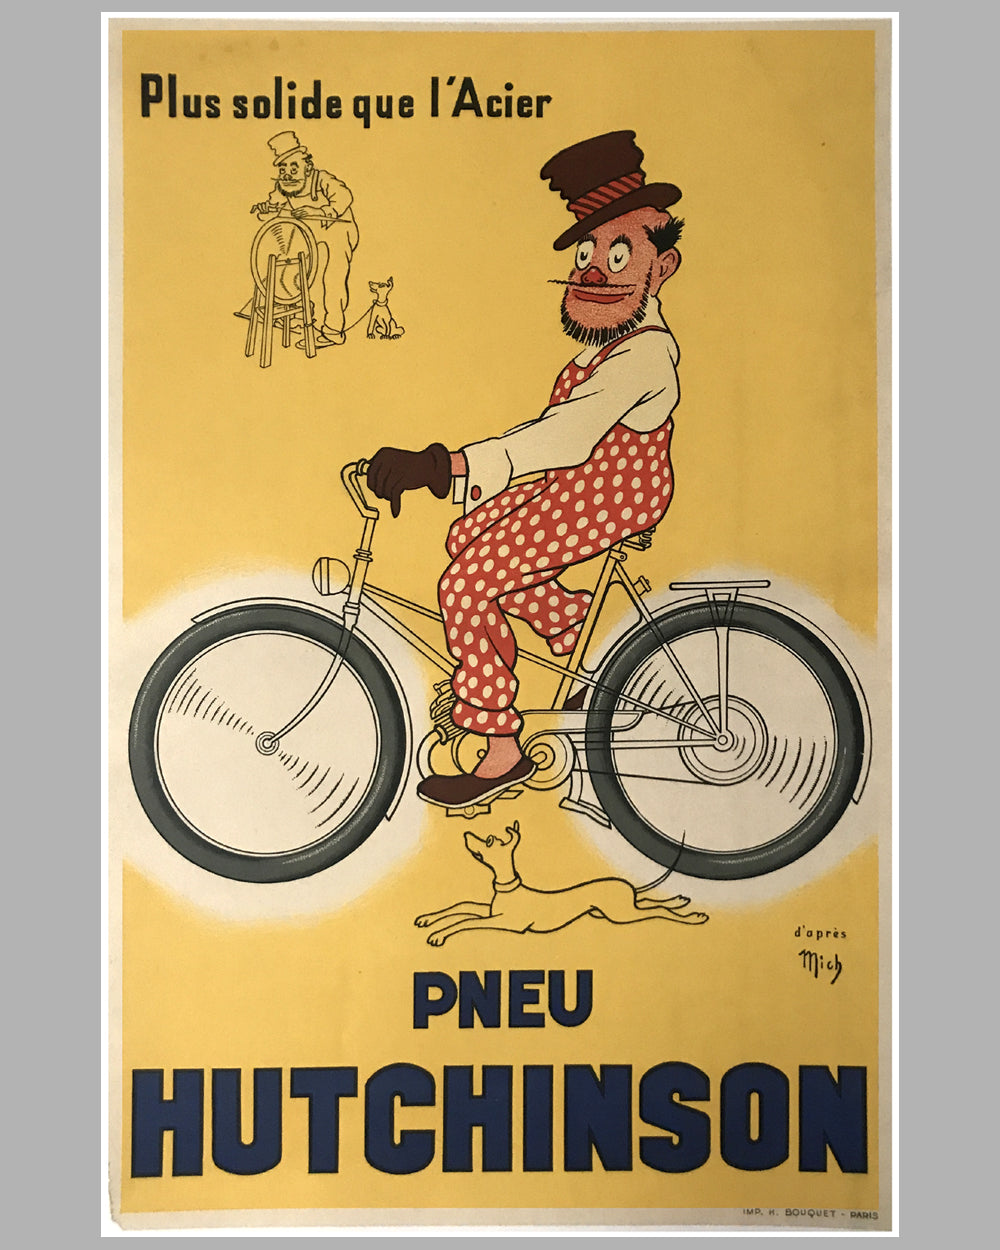 Pneu Hutchinson original poster ca. 1940 by Mich (Michel Liedaux)